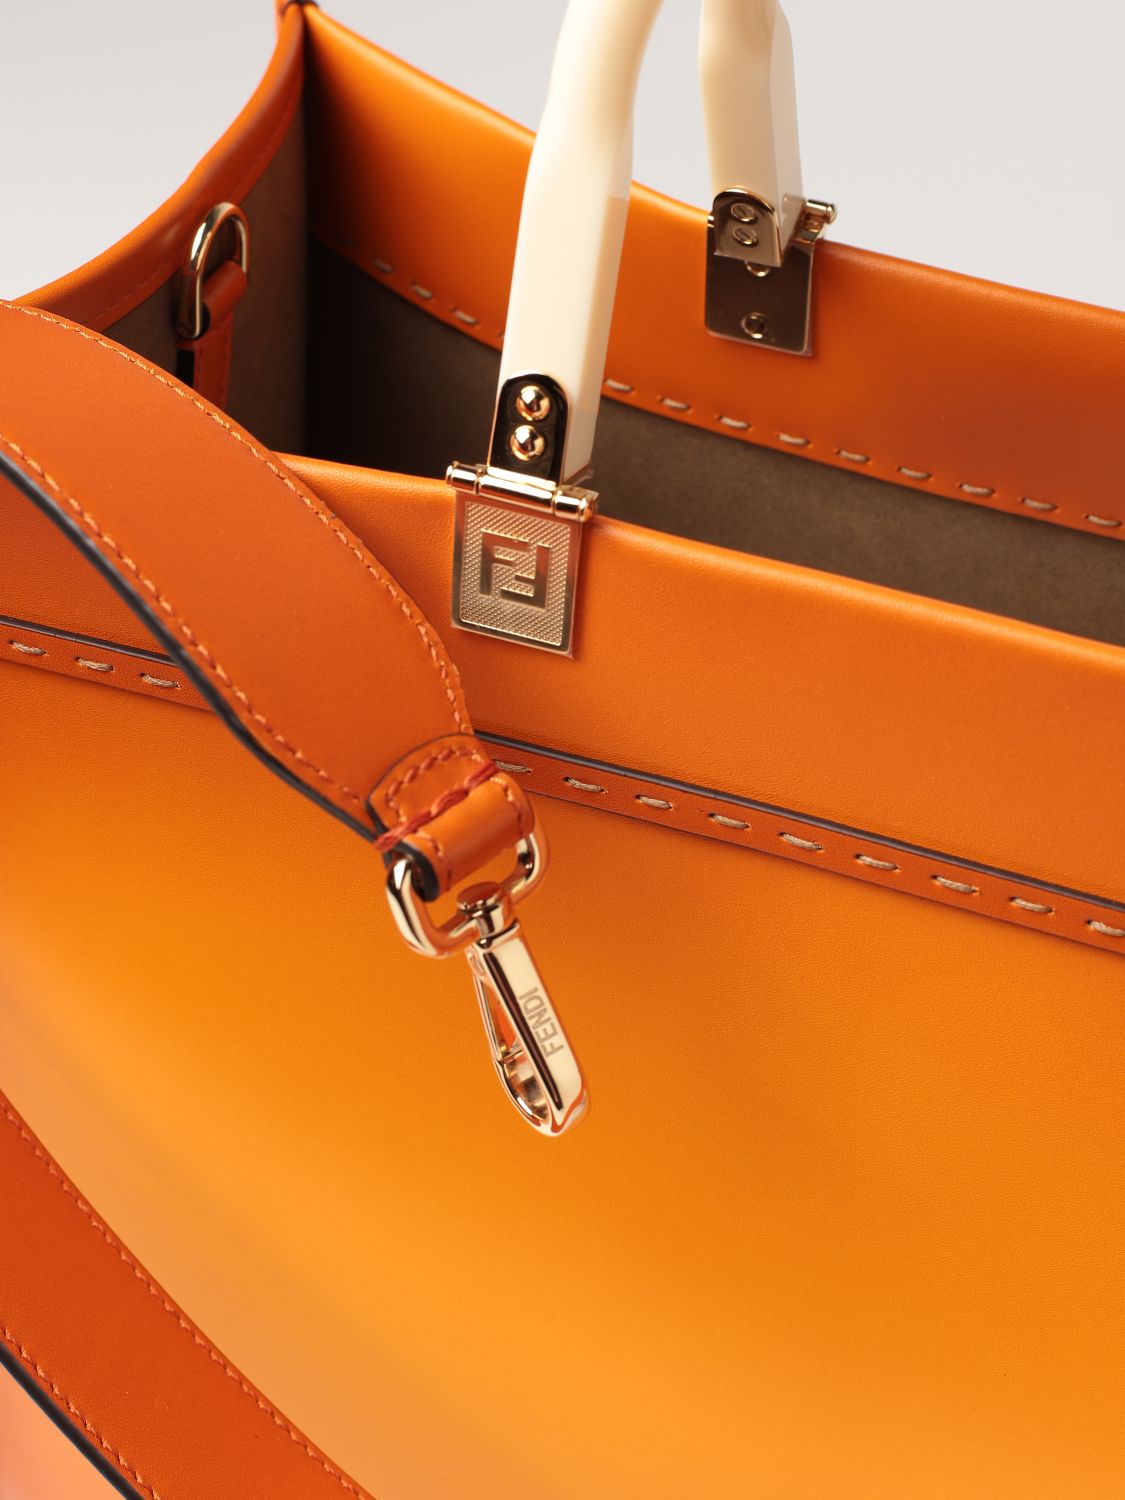 FENDI: Sunshine bag in gradient leather with big Roma logo | Handbag ...